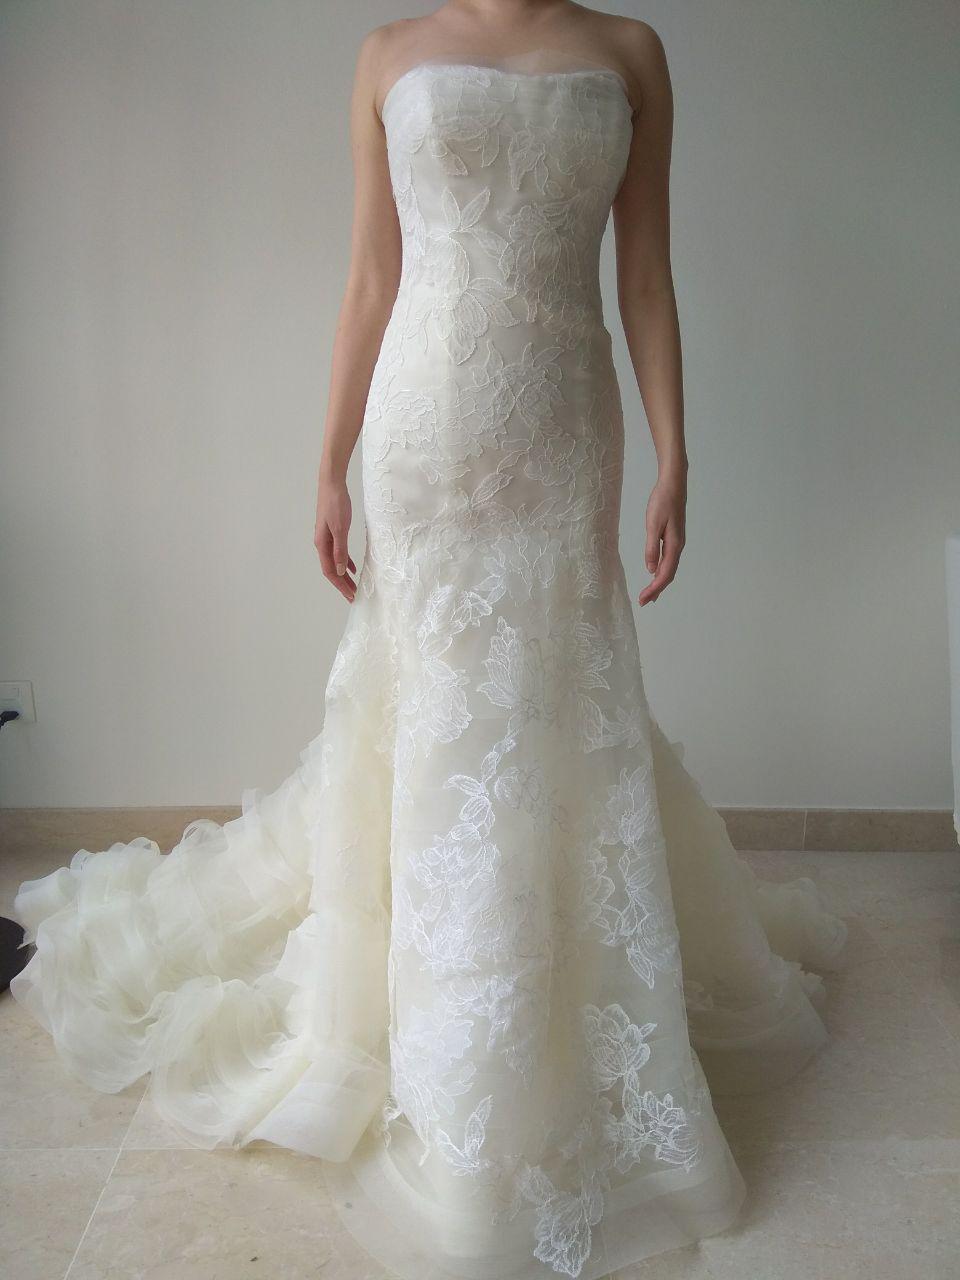 Vera Wang 'Leda' size 6 used wedding dress front view on bride